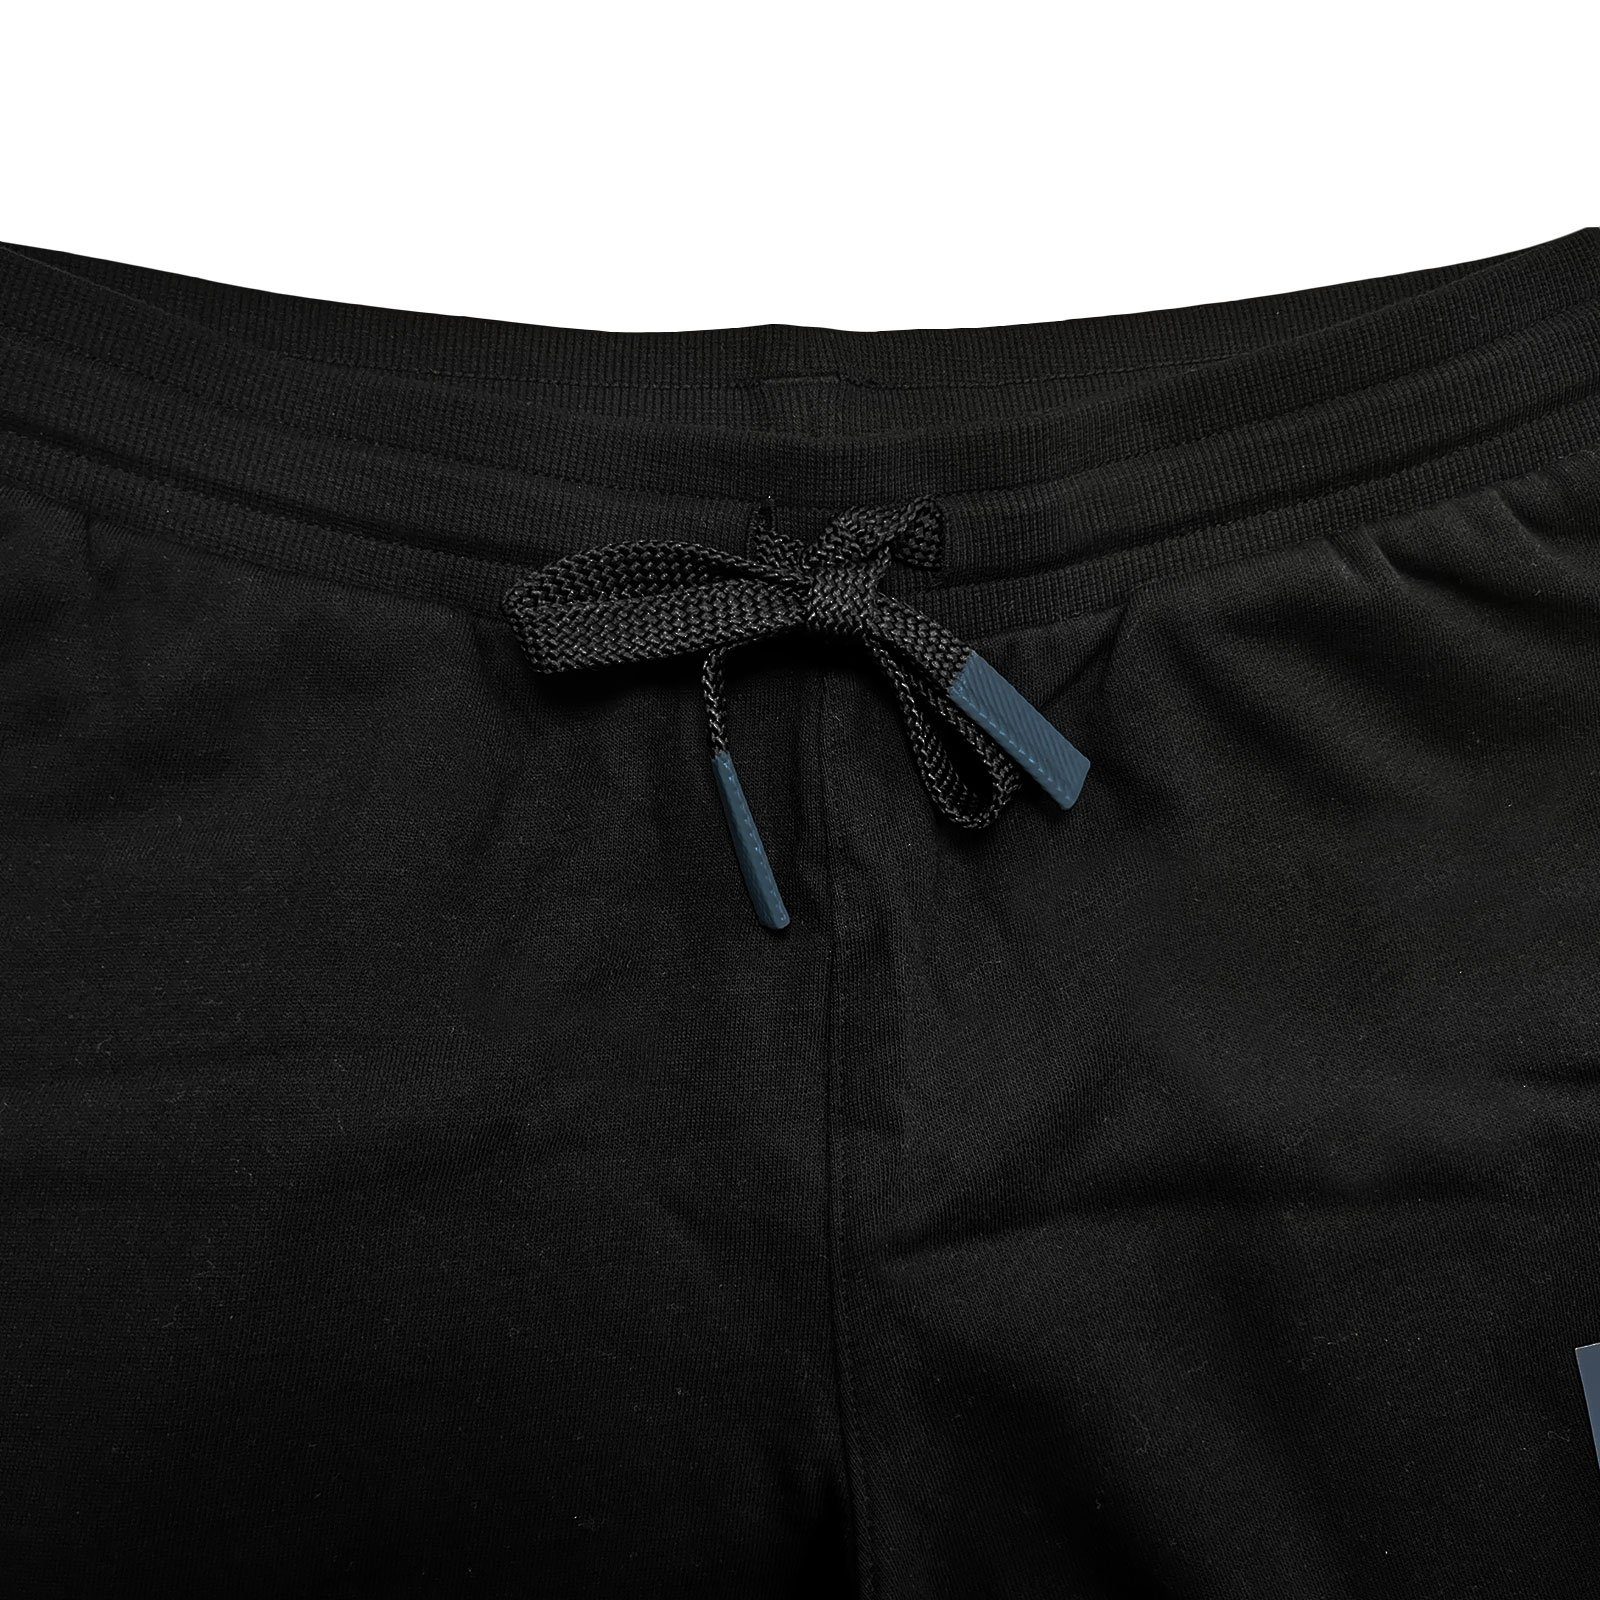 Emporio Armani Loungehose weich black Trousers 00020 angeraut Sweat innen long